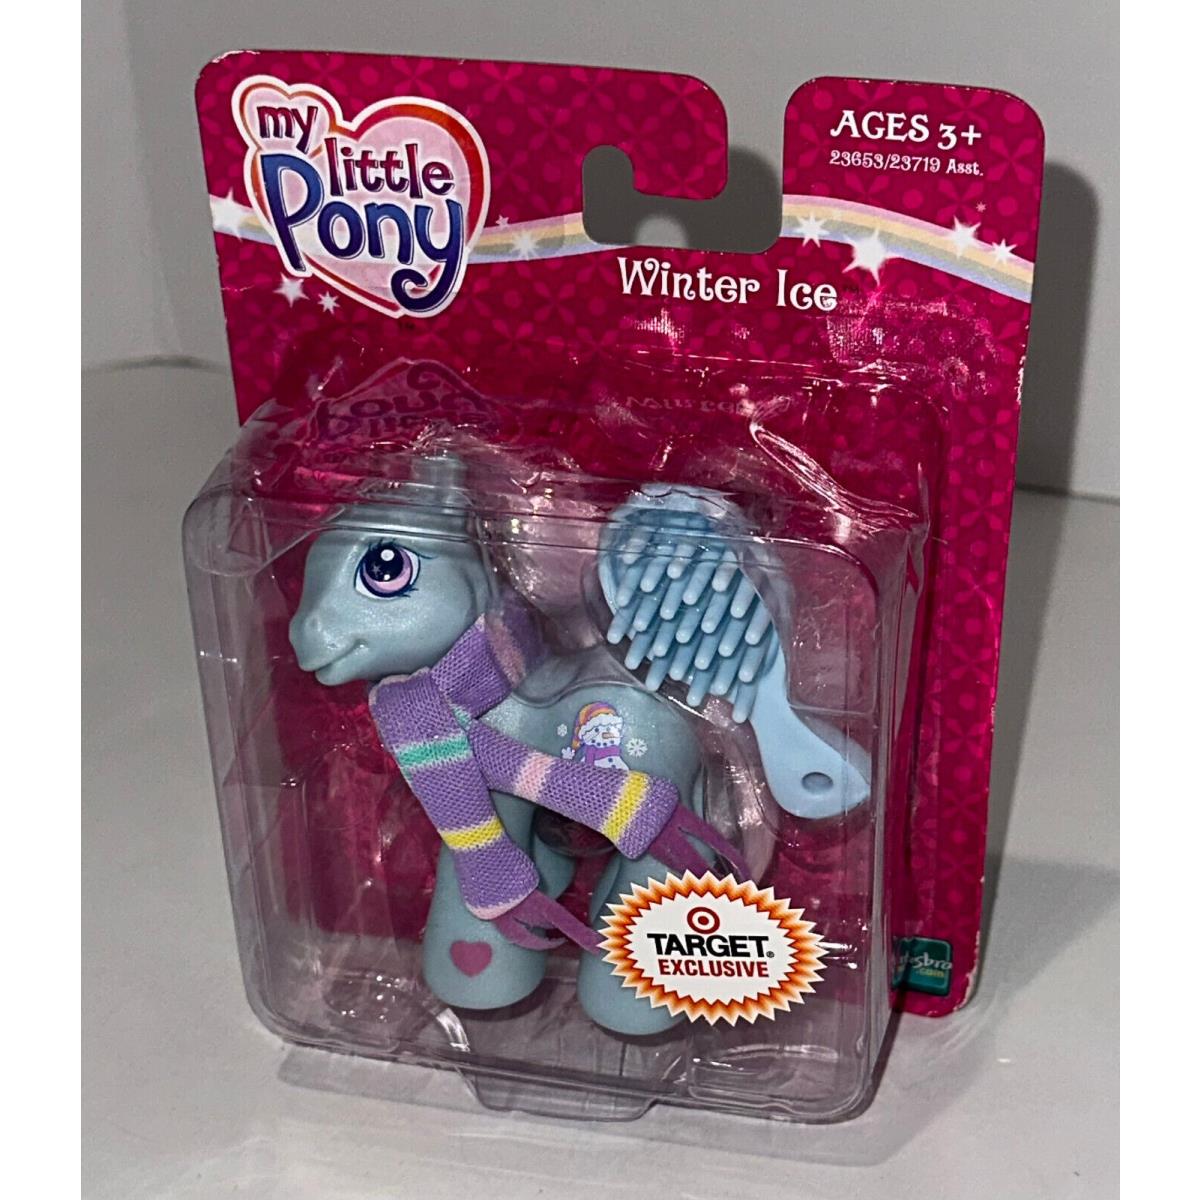 2006 Hasbro My Little Pony G3 Baby Winter Ice Target Exclusive